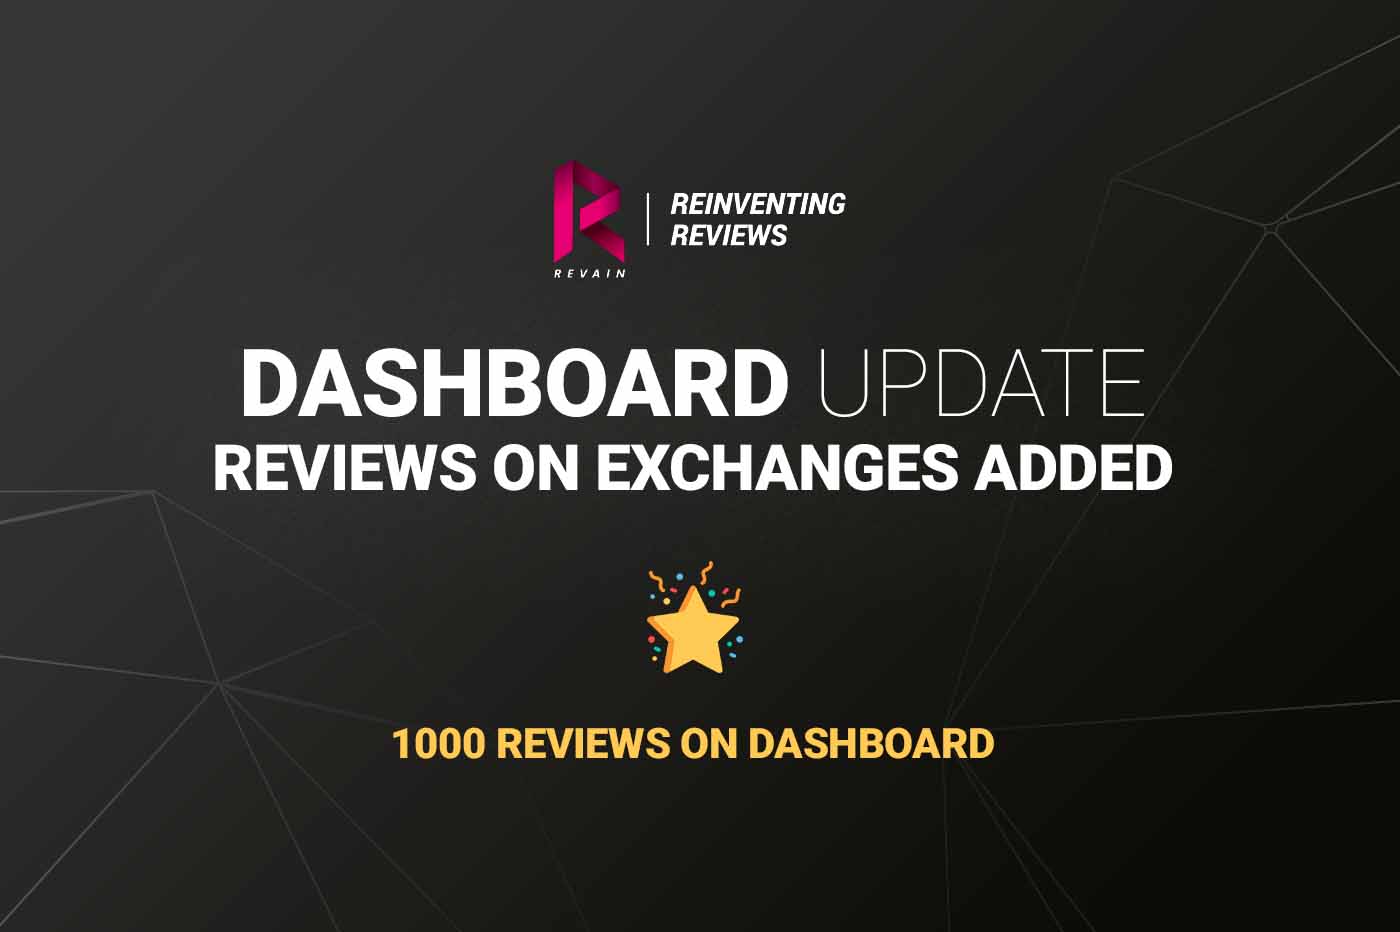 Article Revain announces Dashboard’s next major version 0.6 as the platform hits 1000 reviews